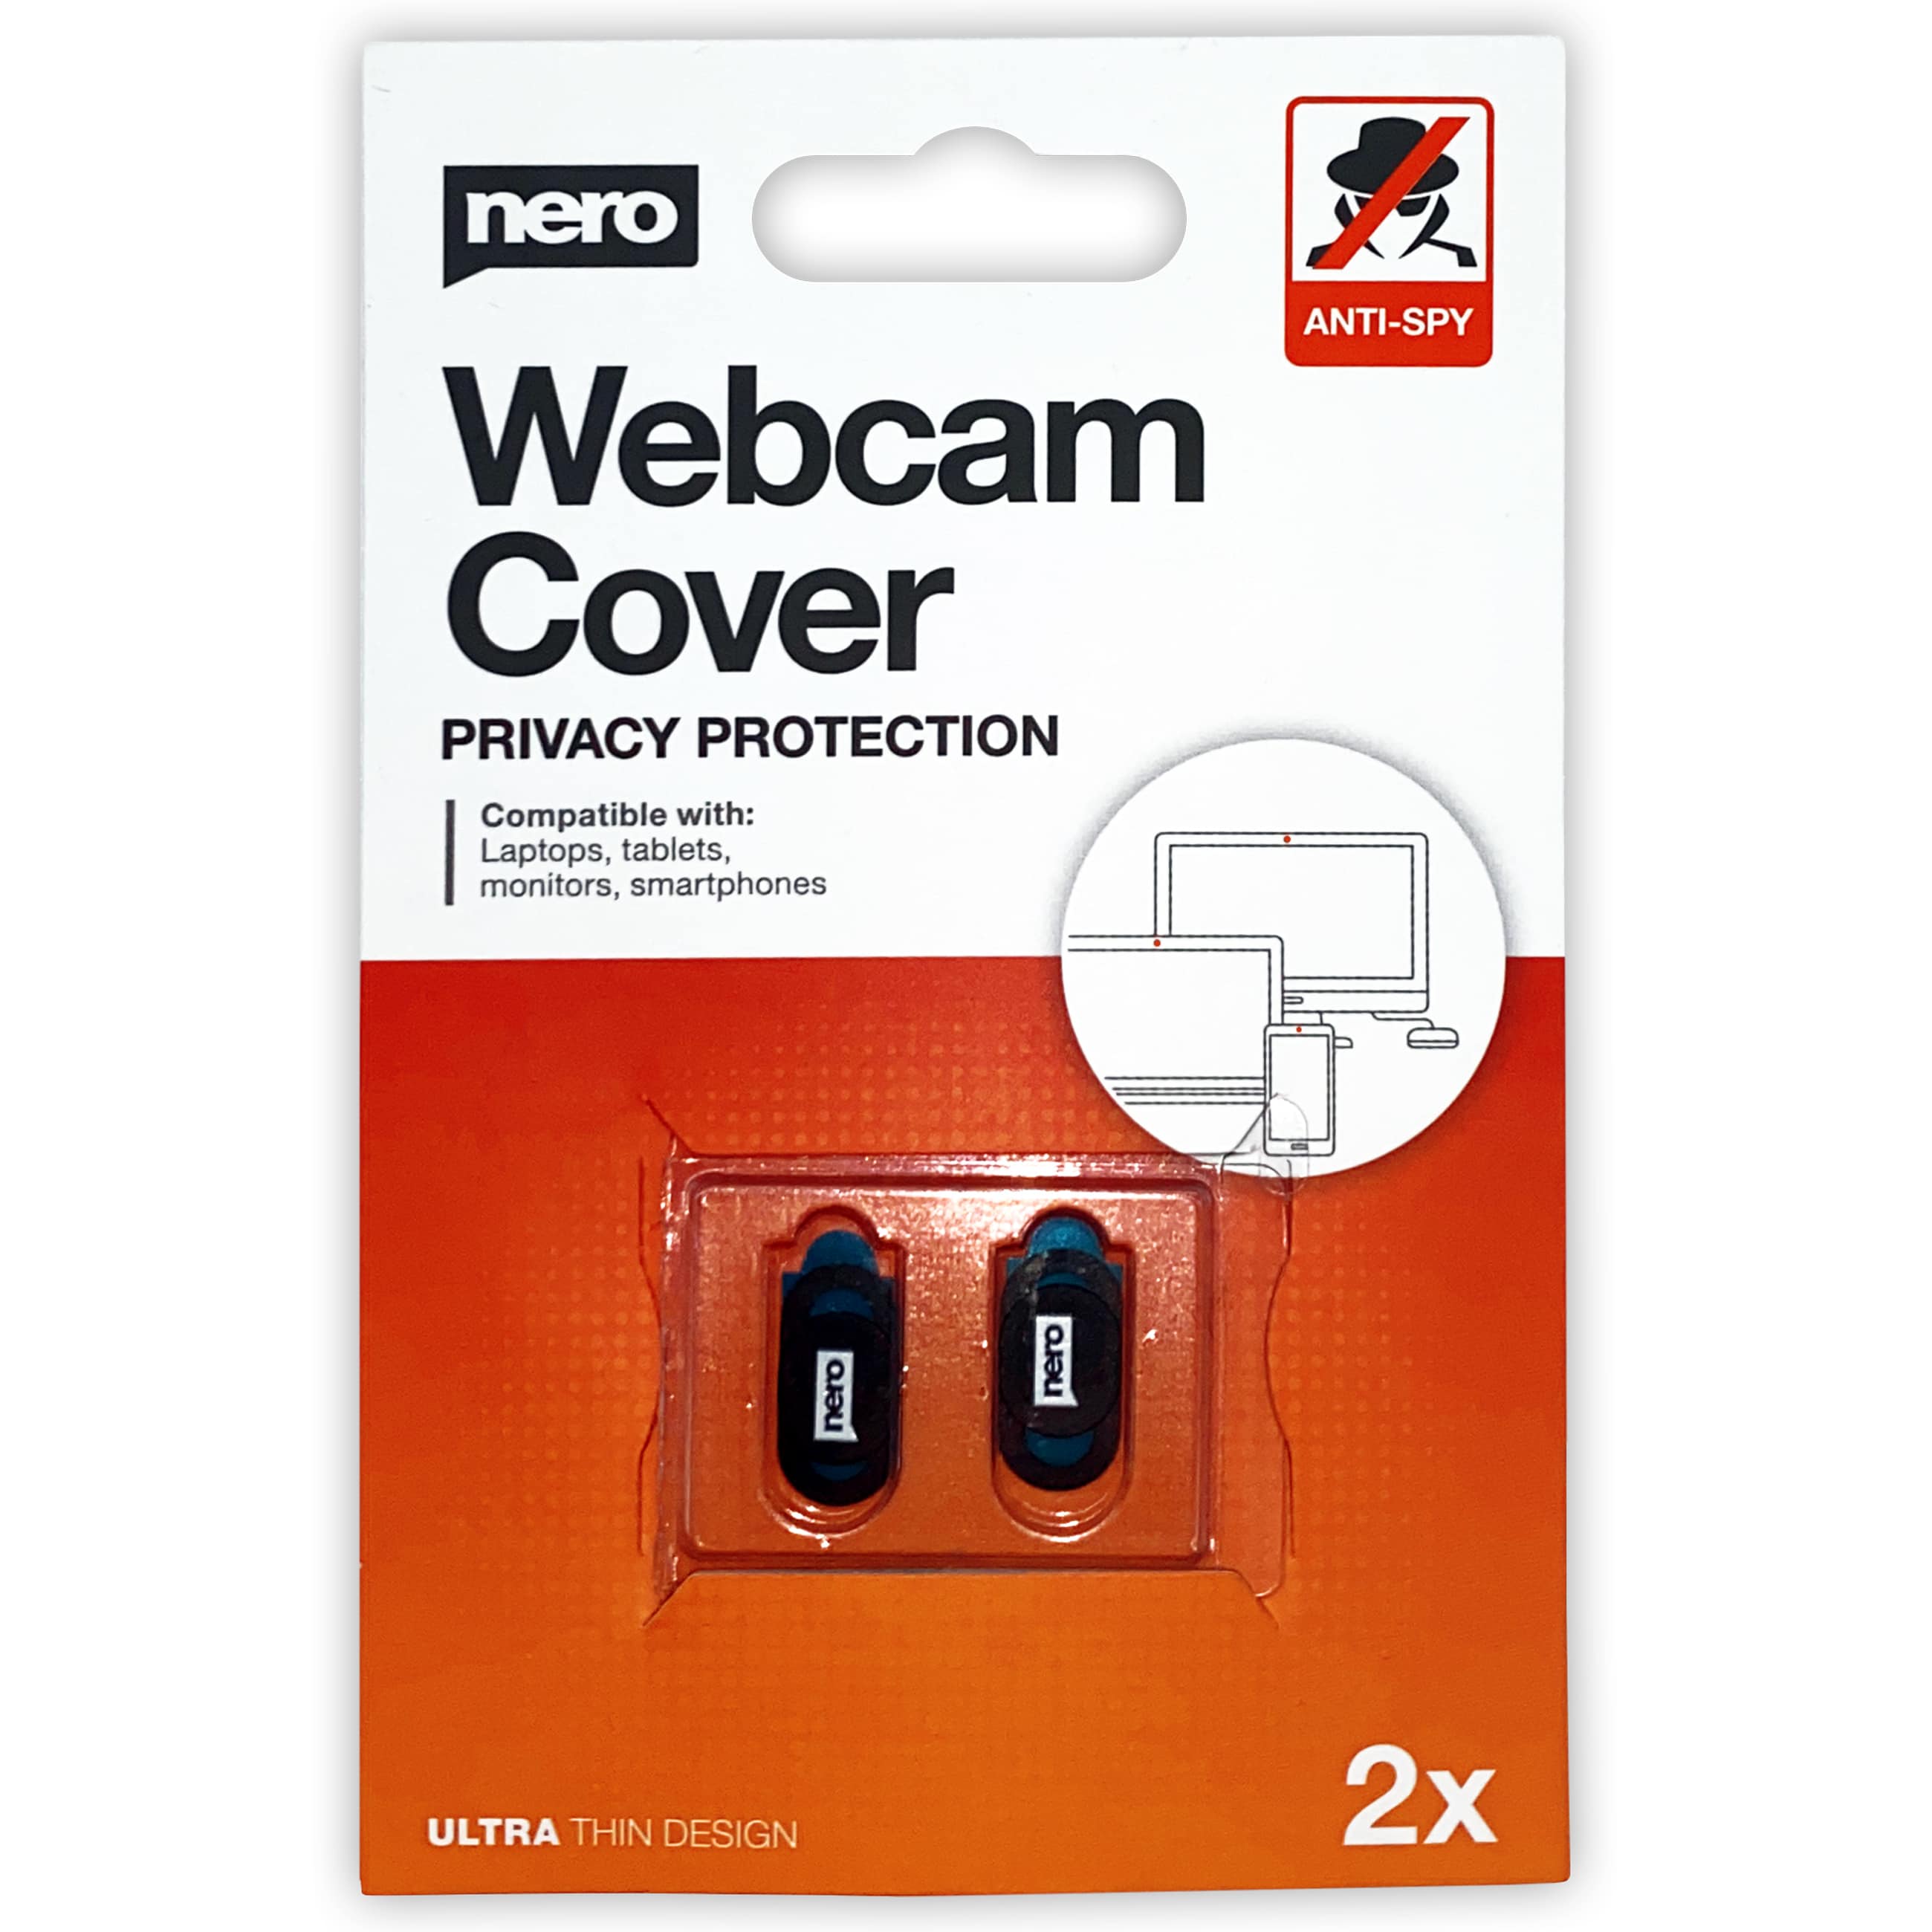 Nero Webcam Abdeckung  (2er Pack)Neuware -